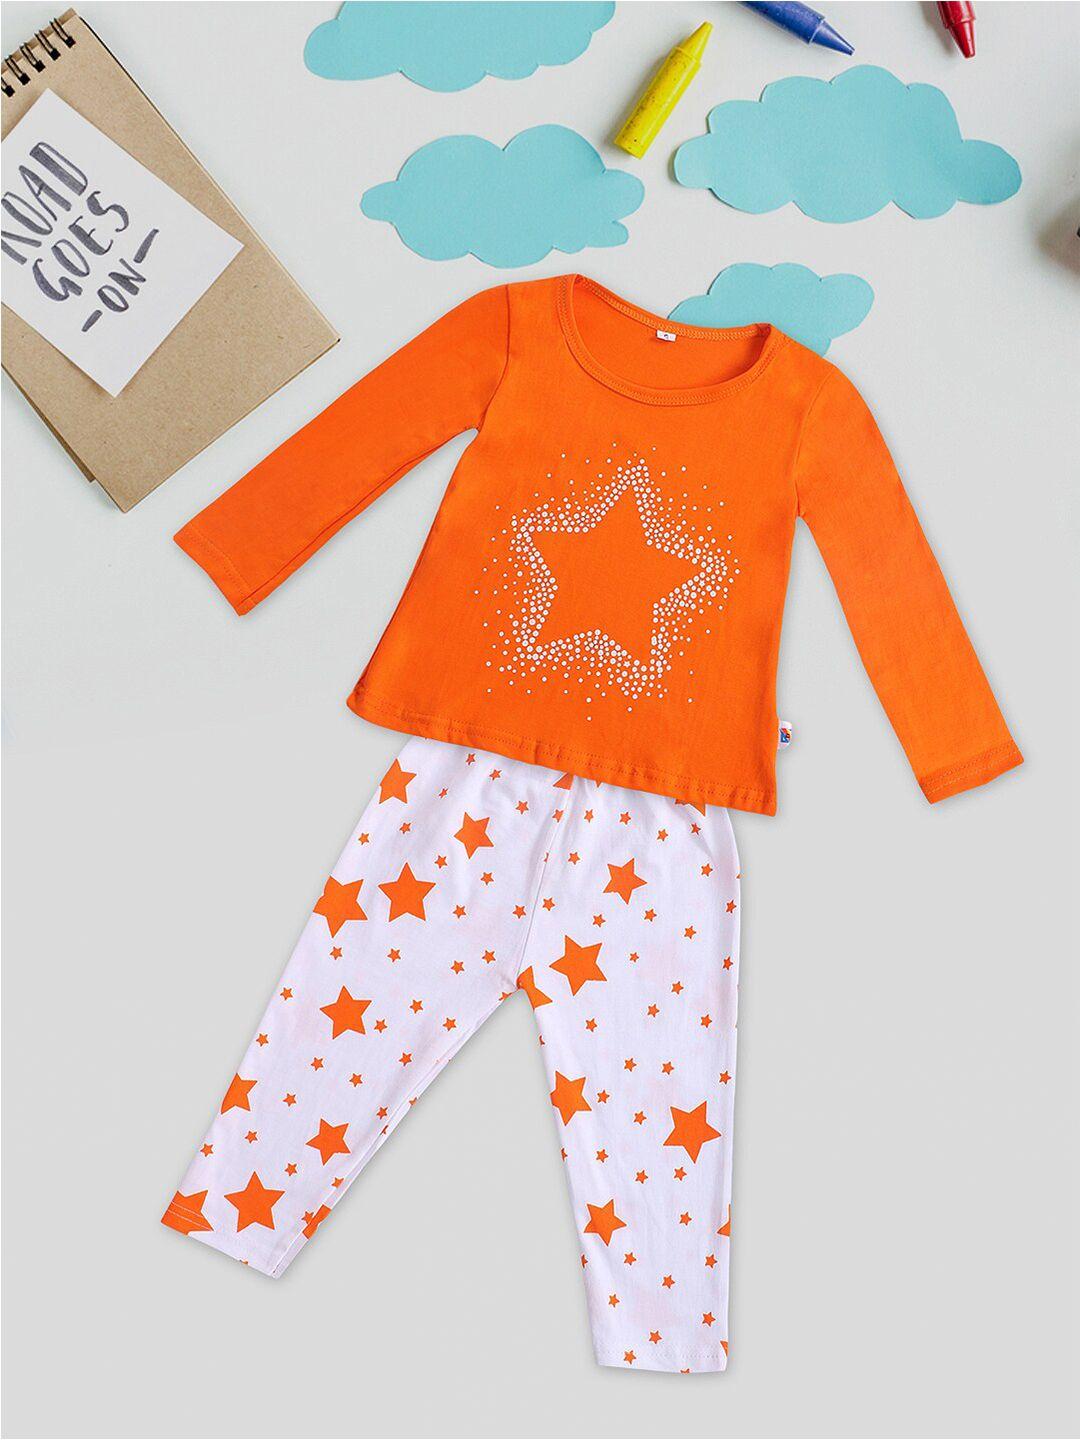 fashitale unisex kids orange & white printed t-shirt with pyjamas